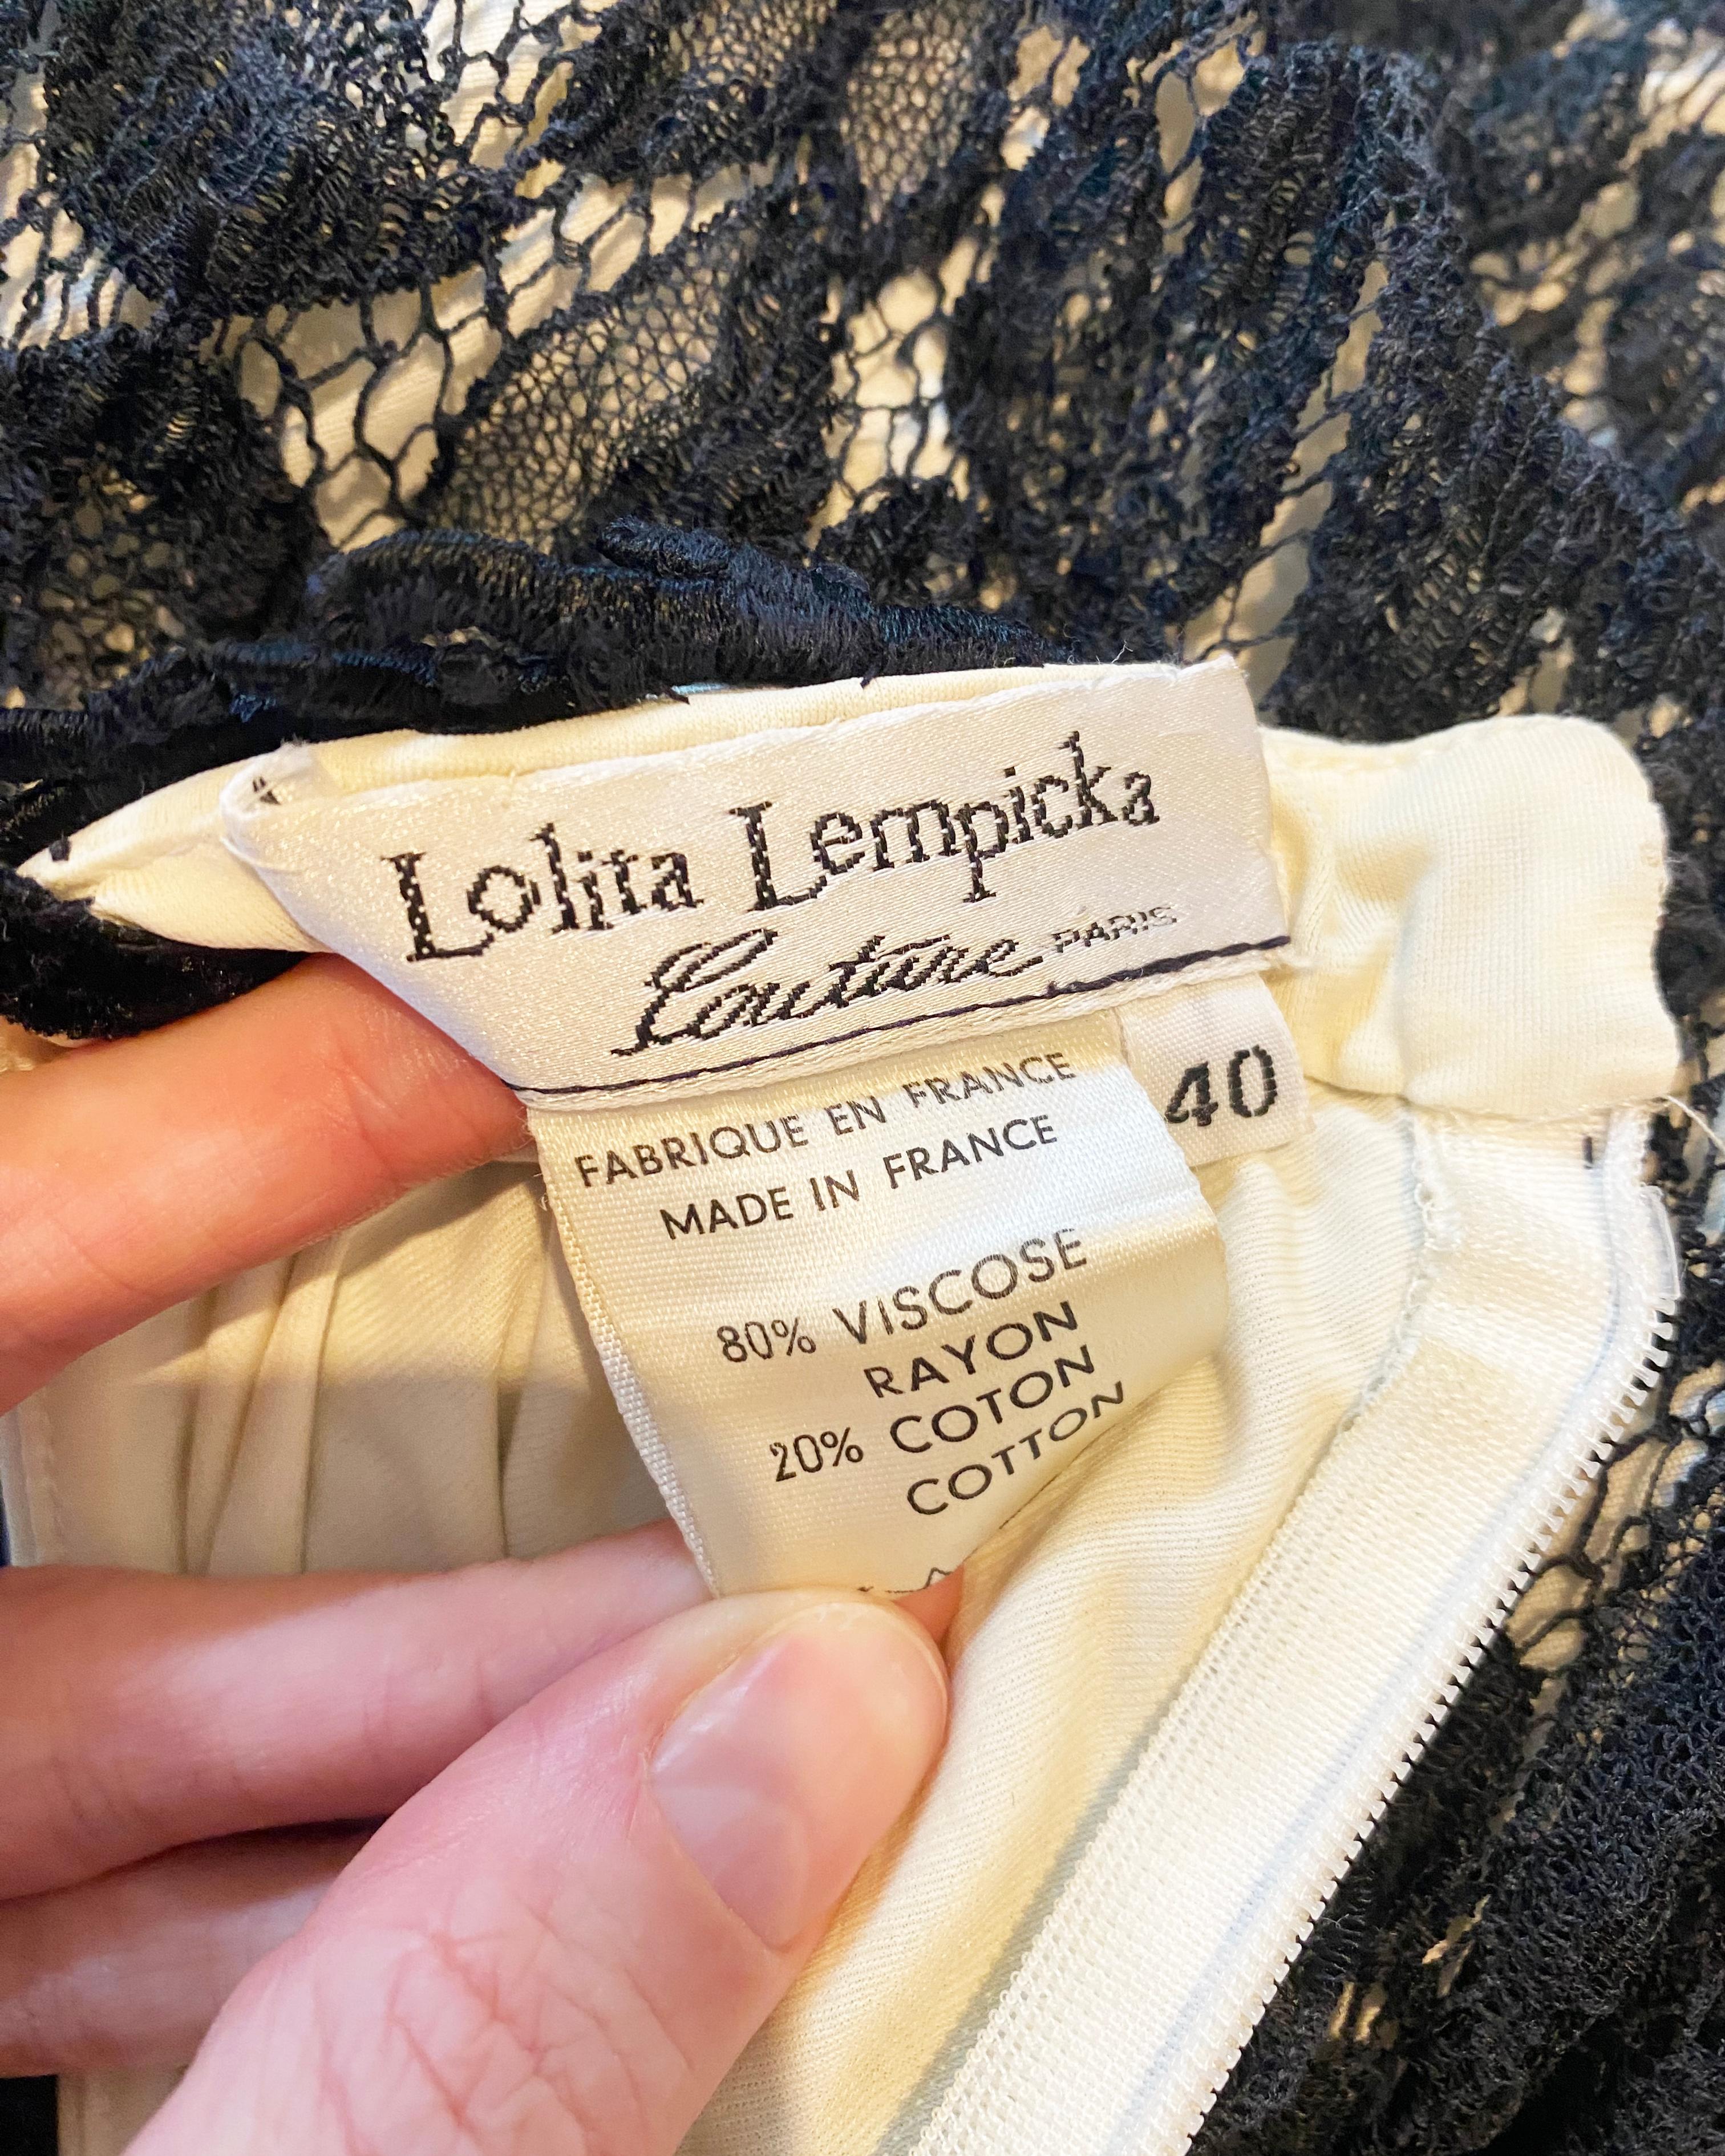 Lolita Lempicka FW 1995 Black white sheer crochet lace overlay bustier dress 40 For Sale 16